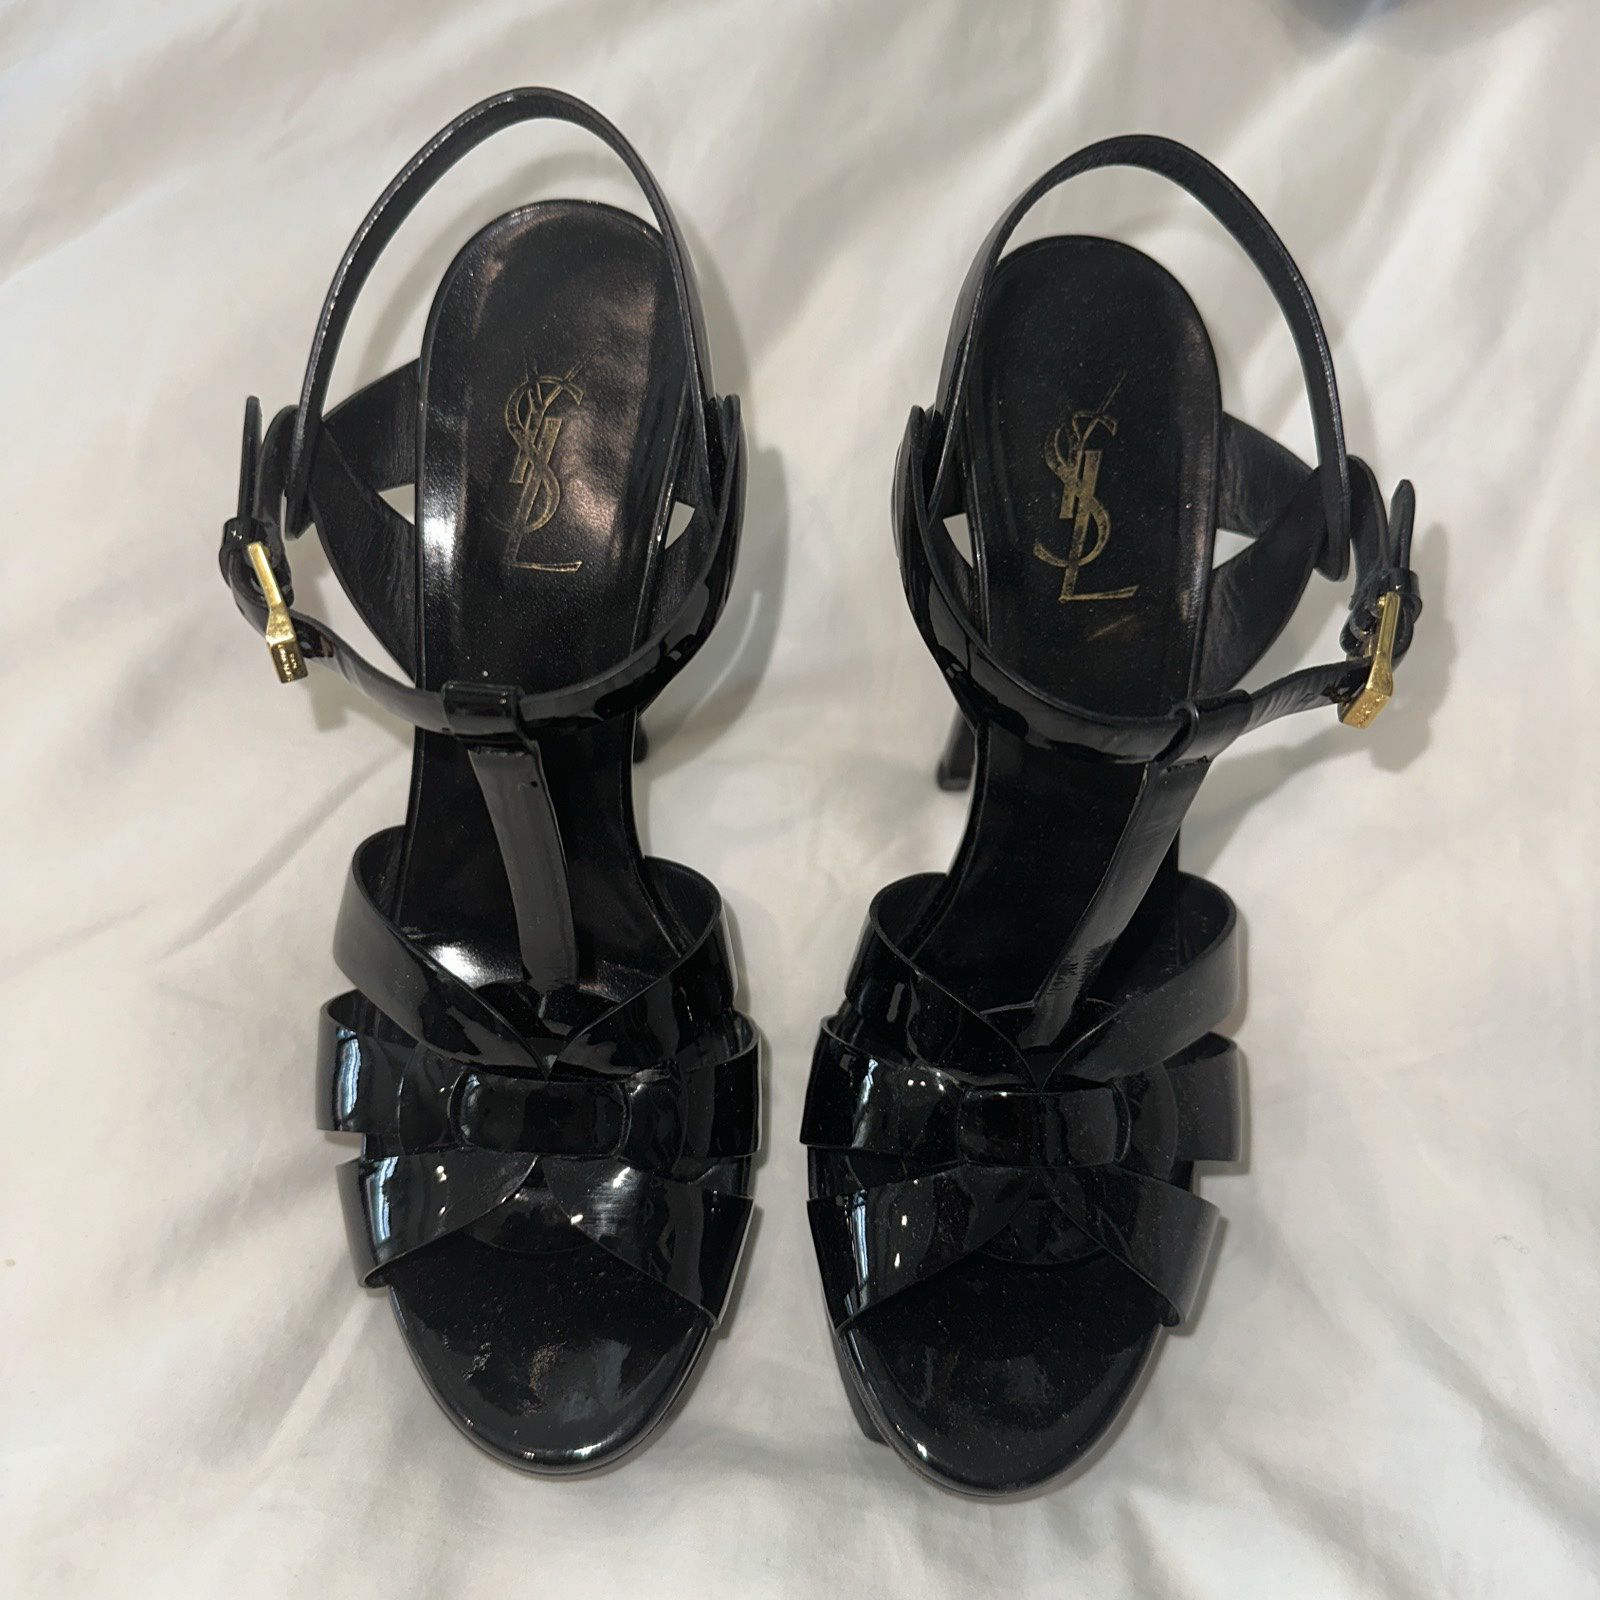 Yves Saint Laurent/YSL Black Patent Leather Tribute Sandals EUR 39.5